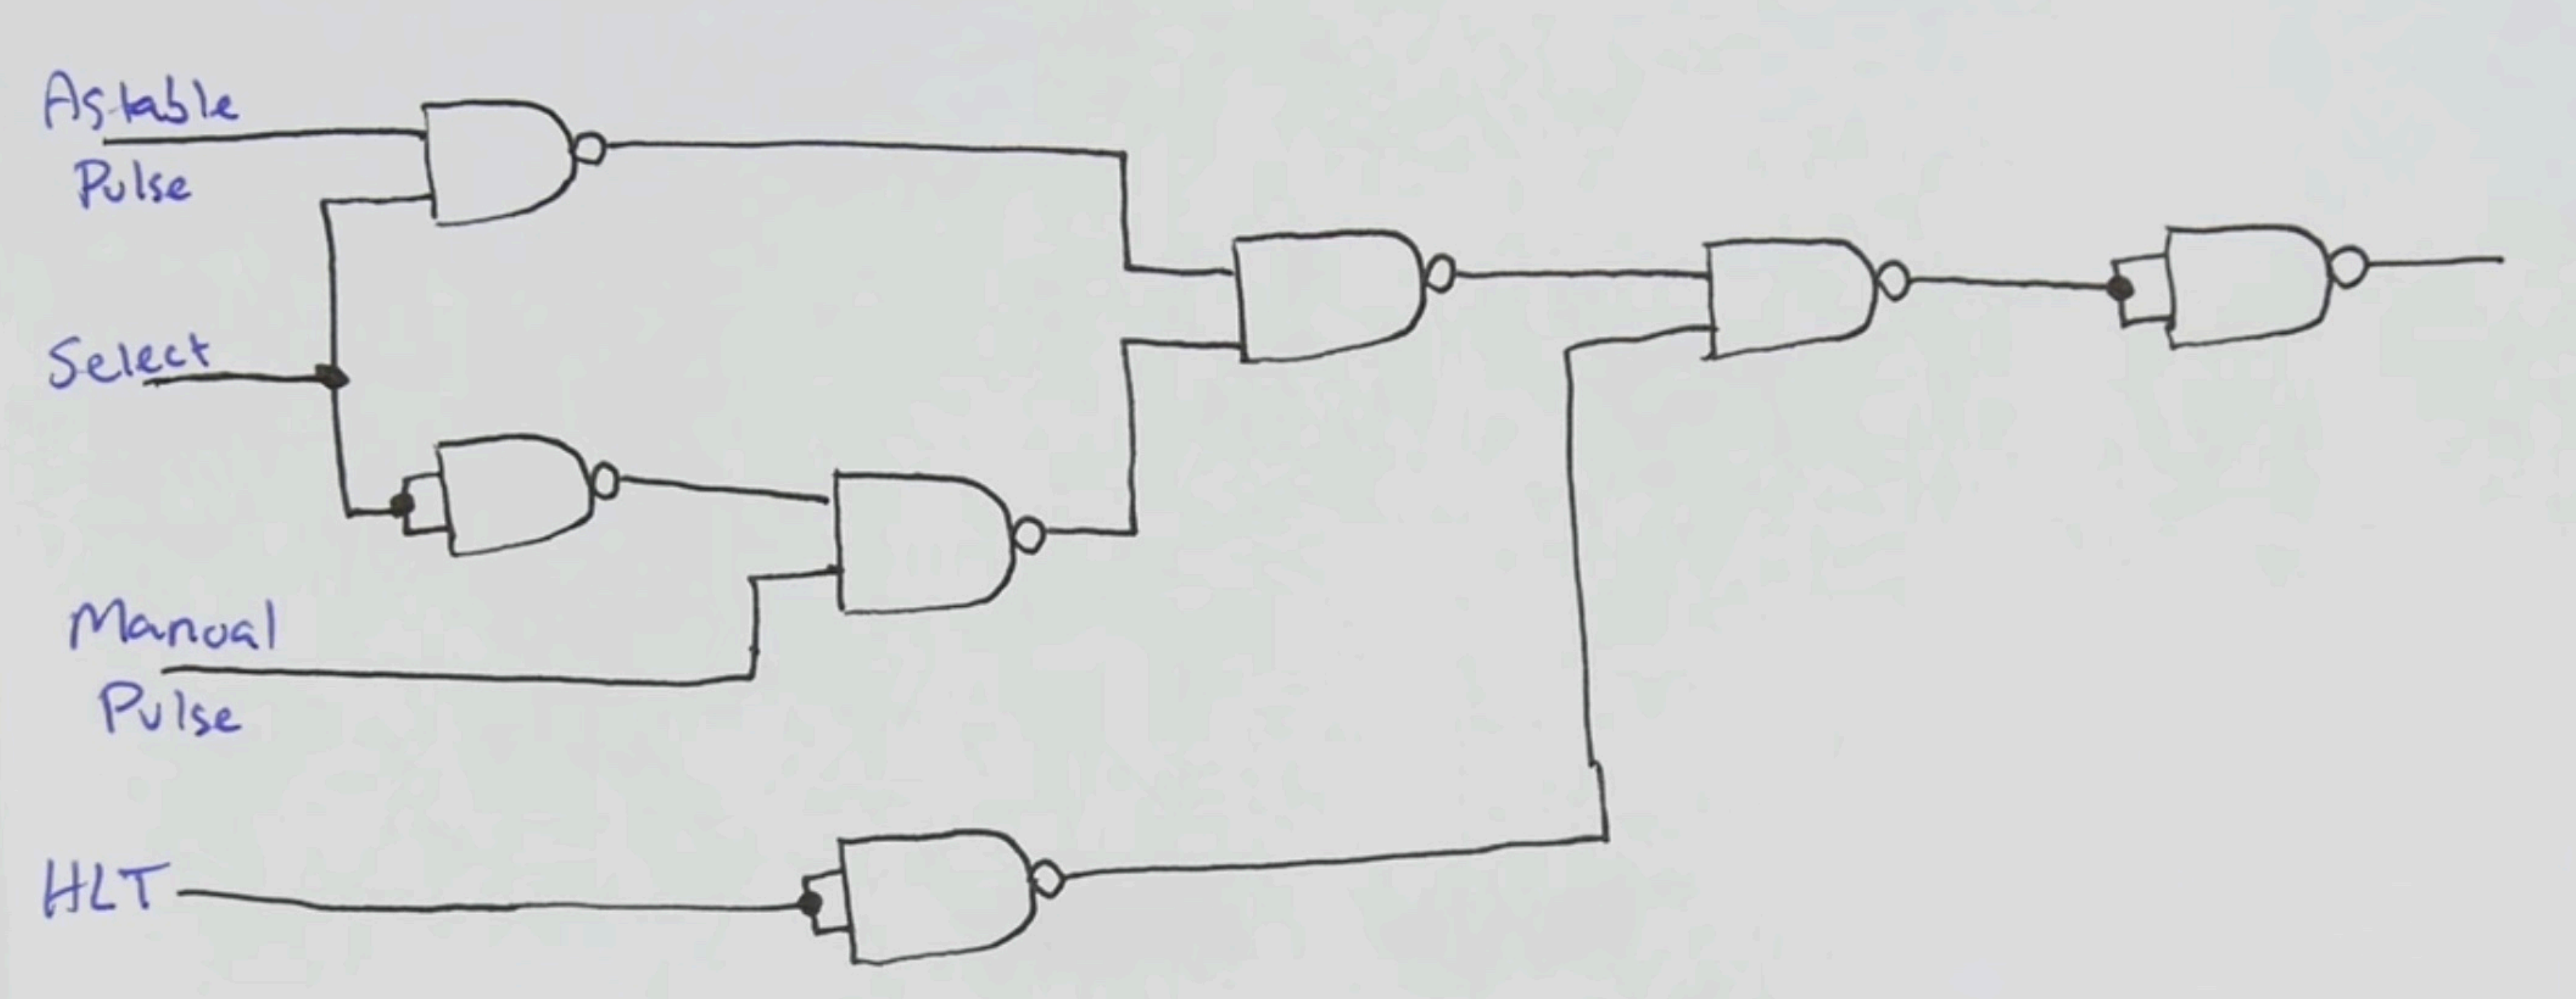 Figure 14: Clock switching Logic using NAND Gates